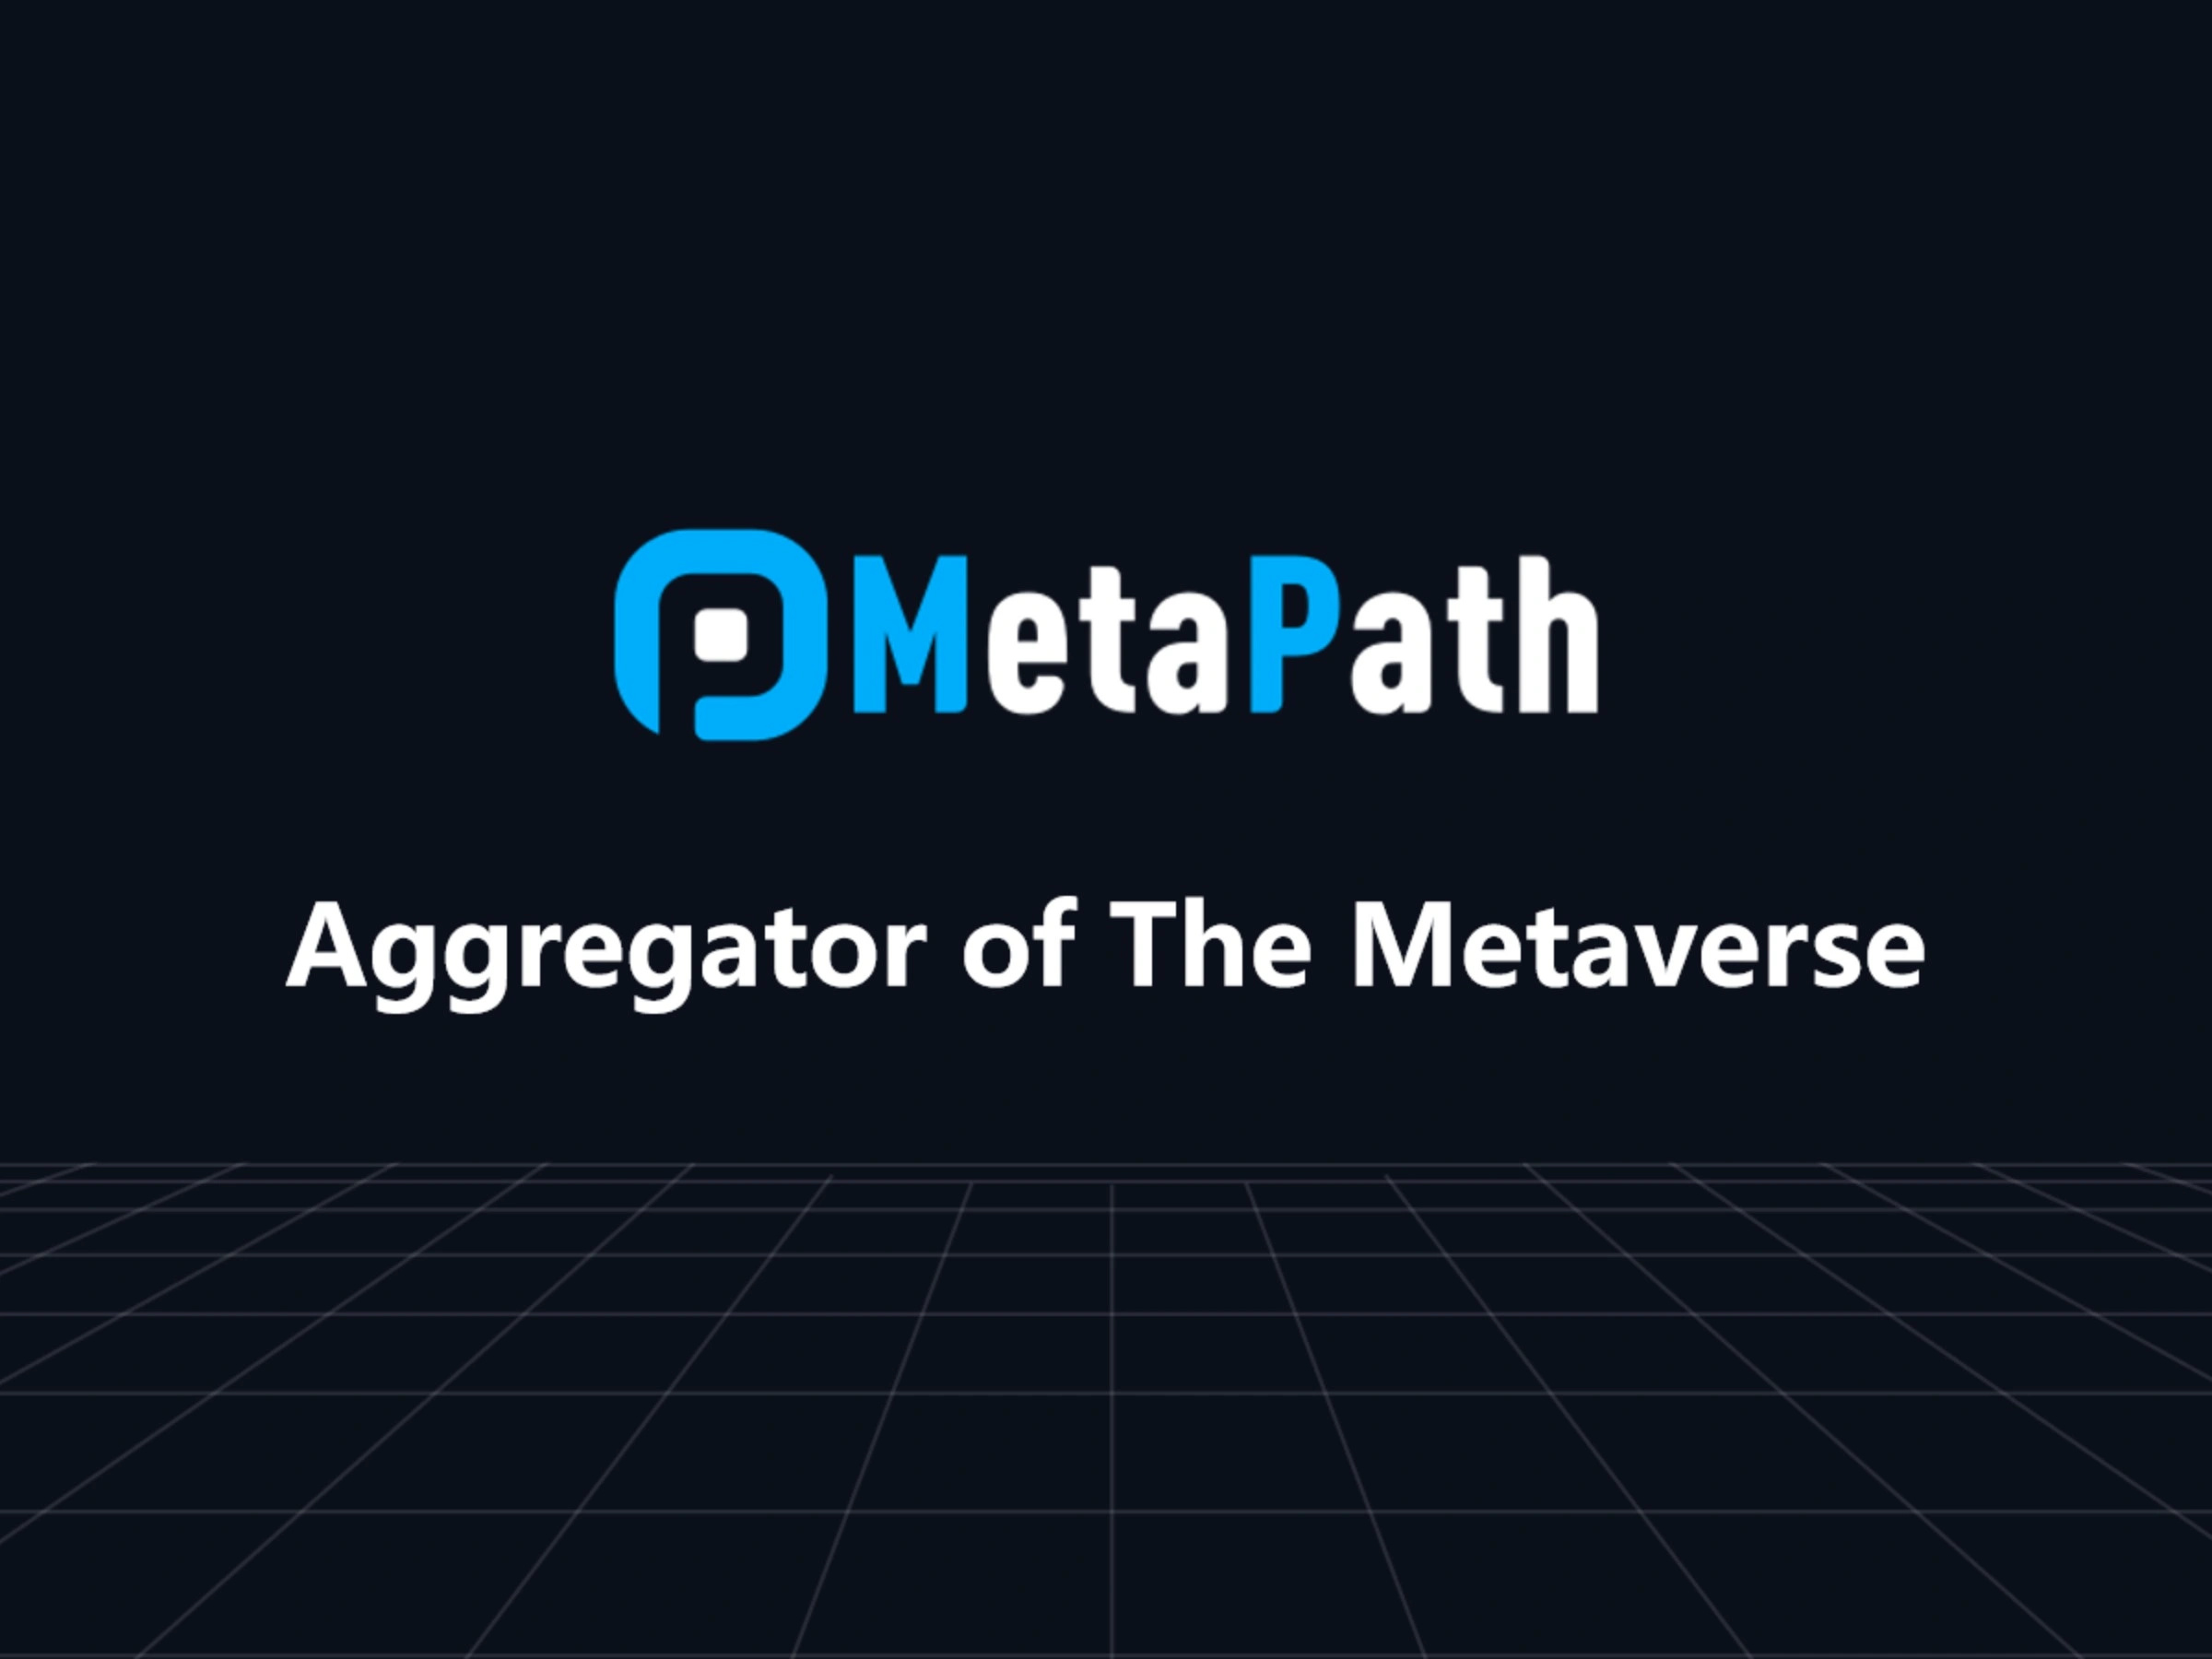 MetaPath